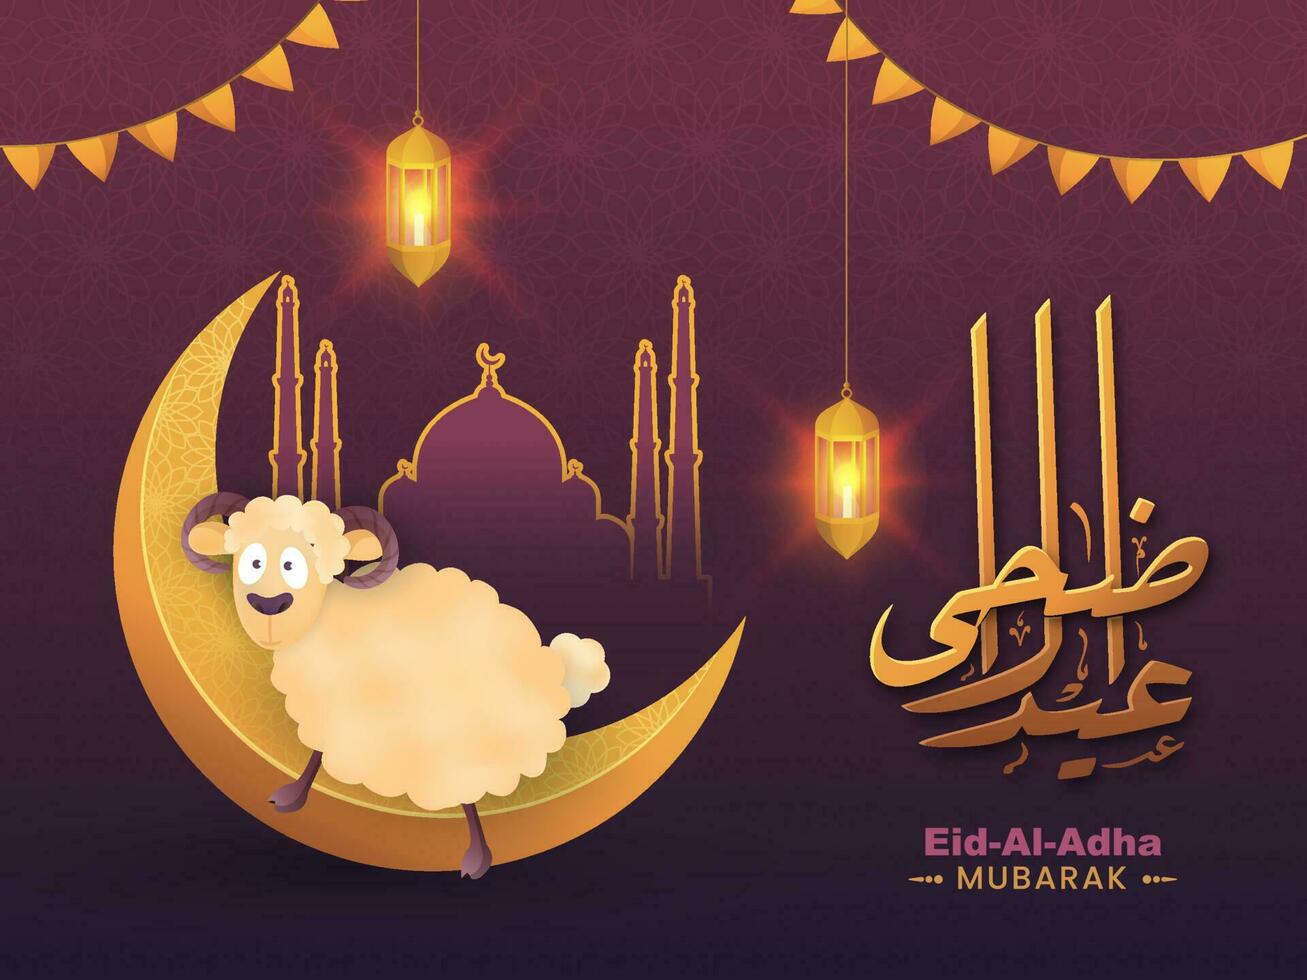 Paper Cut Illustration of Cartoon Sheep, Crescent Moon, Mosque and Hanging Illuminated Lanterns on Gradient Burgundy Arabic Pattern Background for Eid-Al-Adha Mubarak. vector